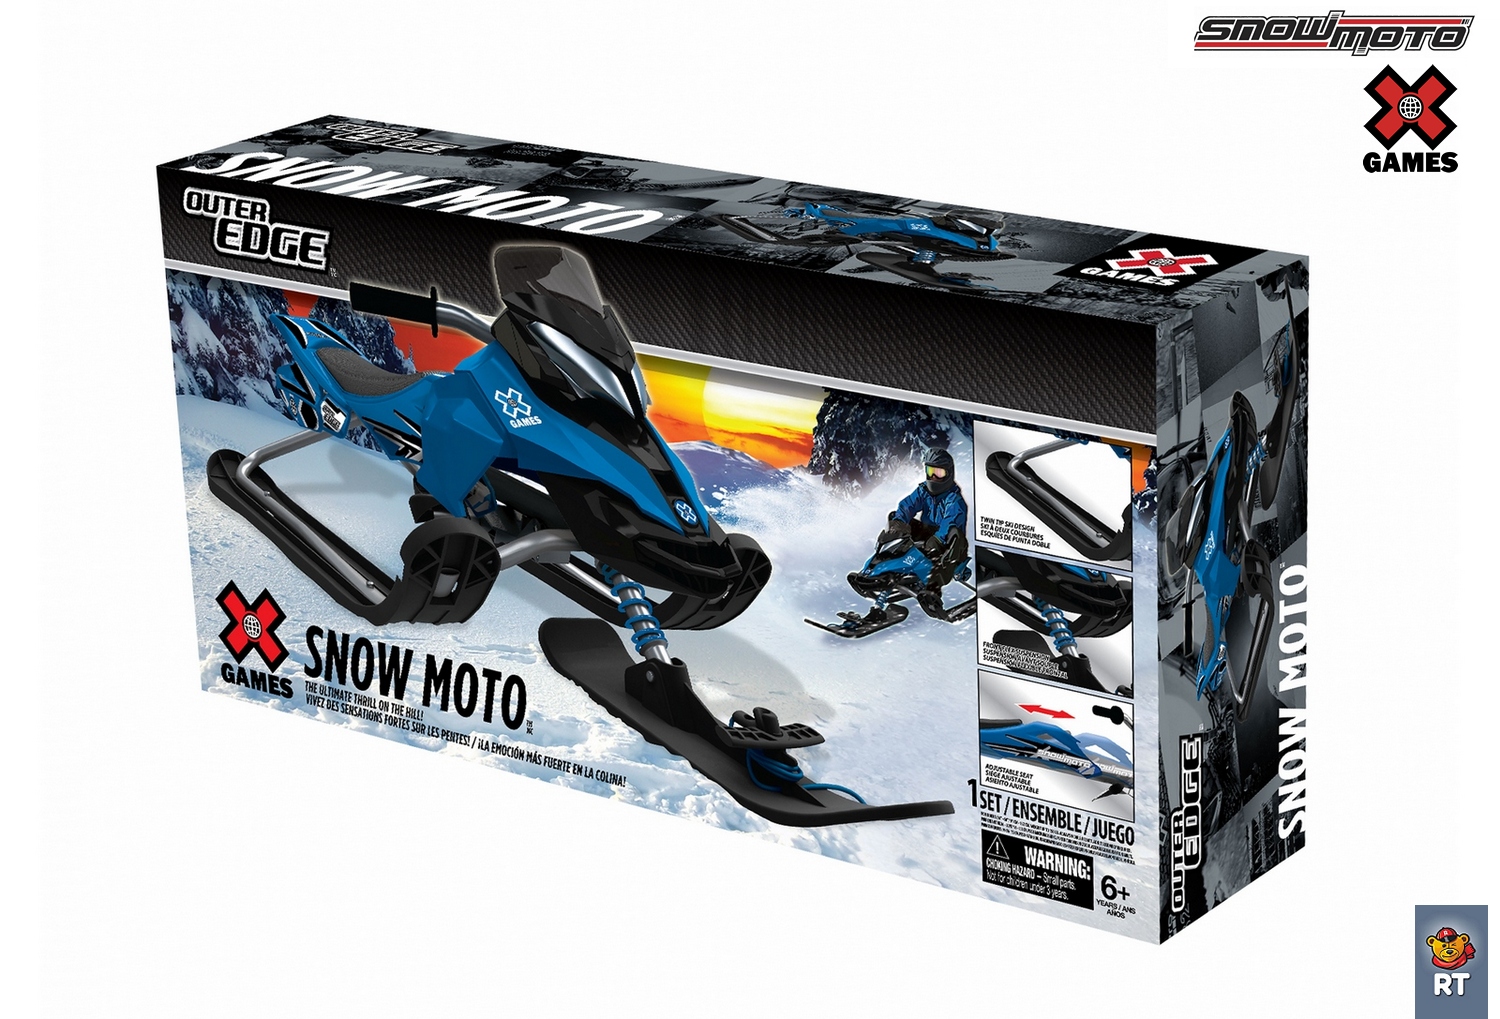 Snow moto